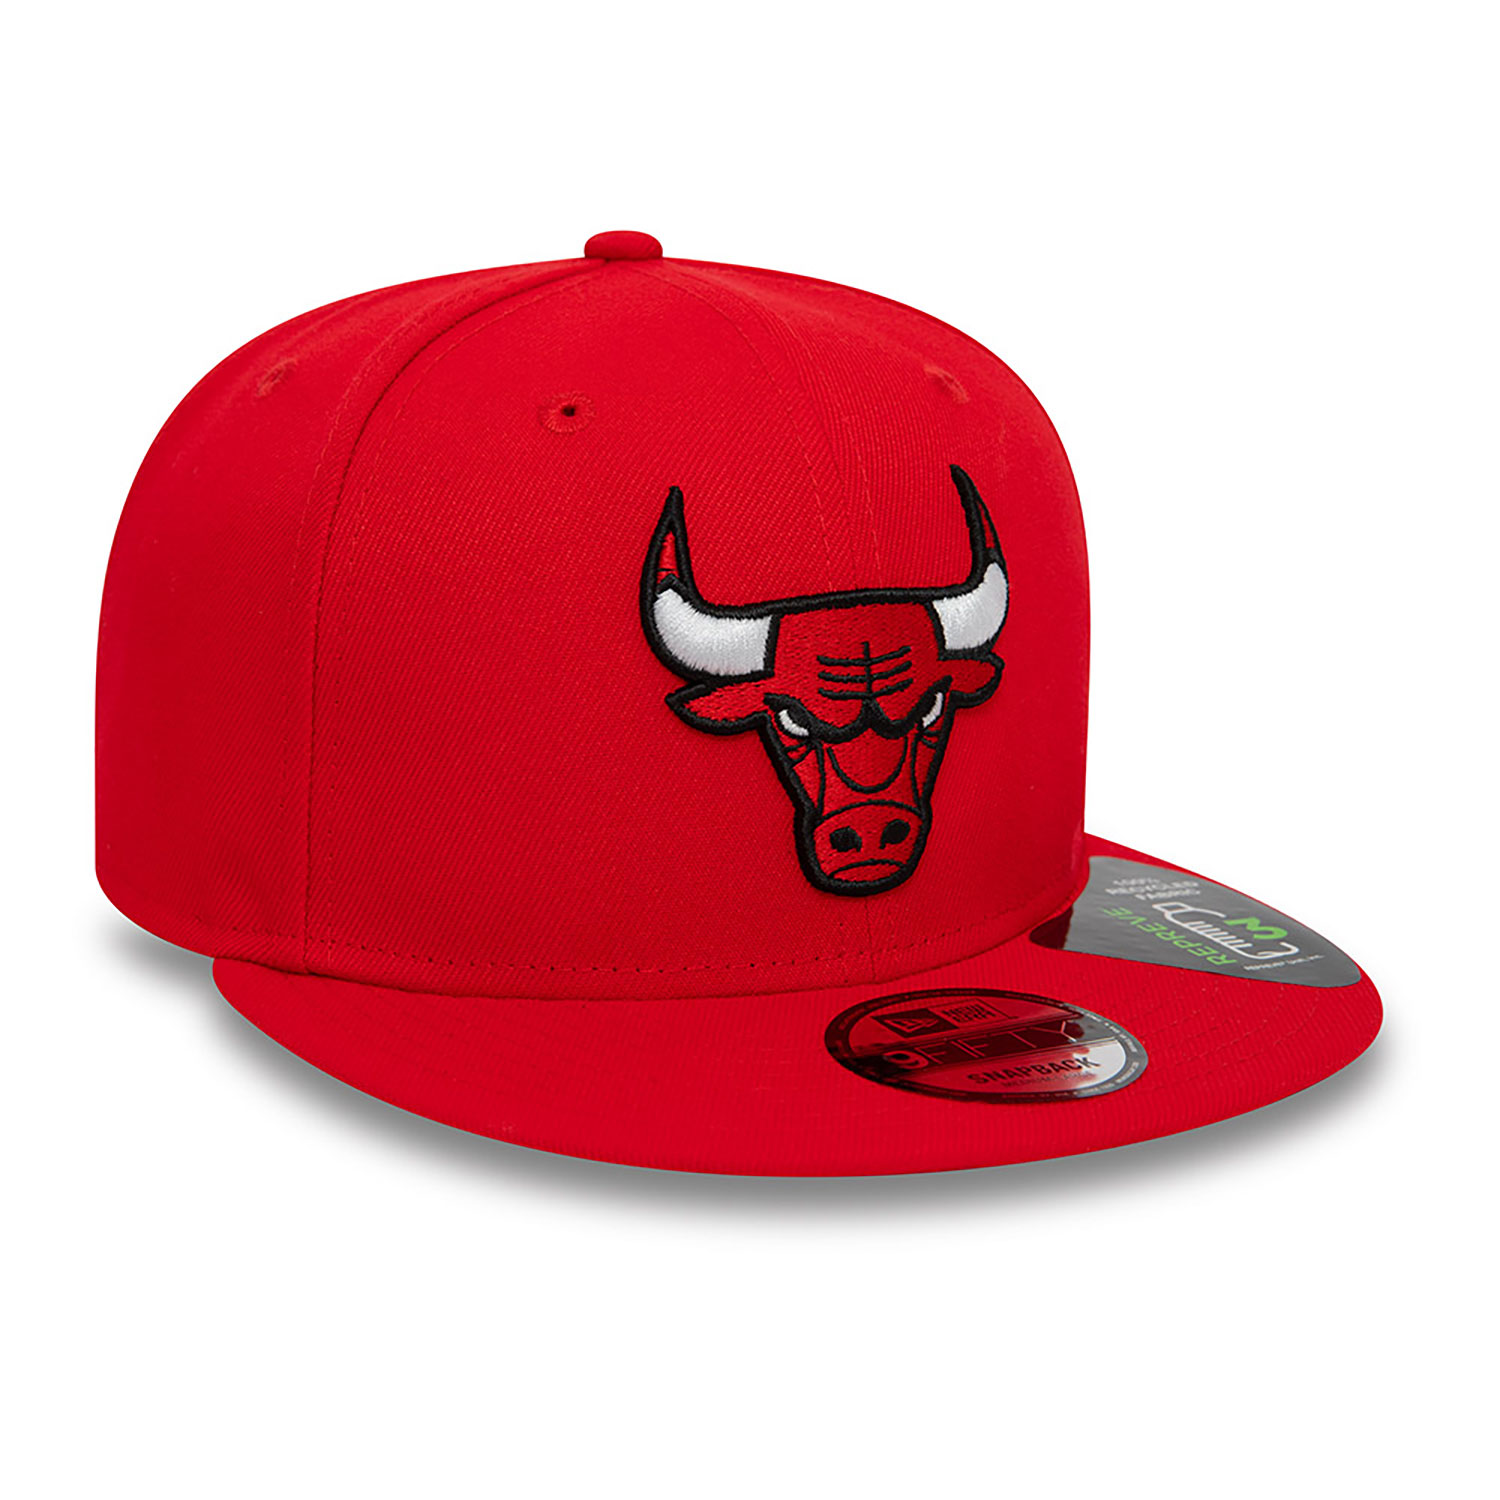 Chicago Bulls NBA Repreve Red 9FIFTY Snapback Cap